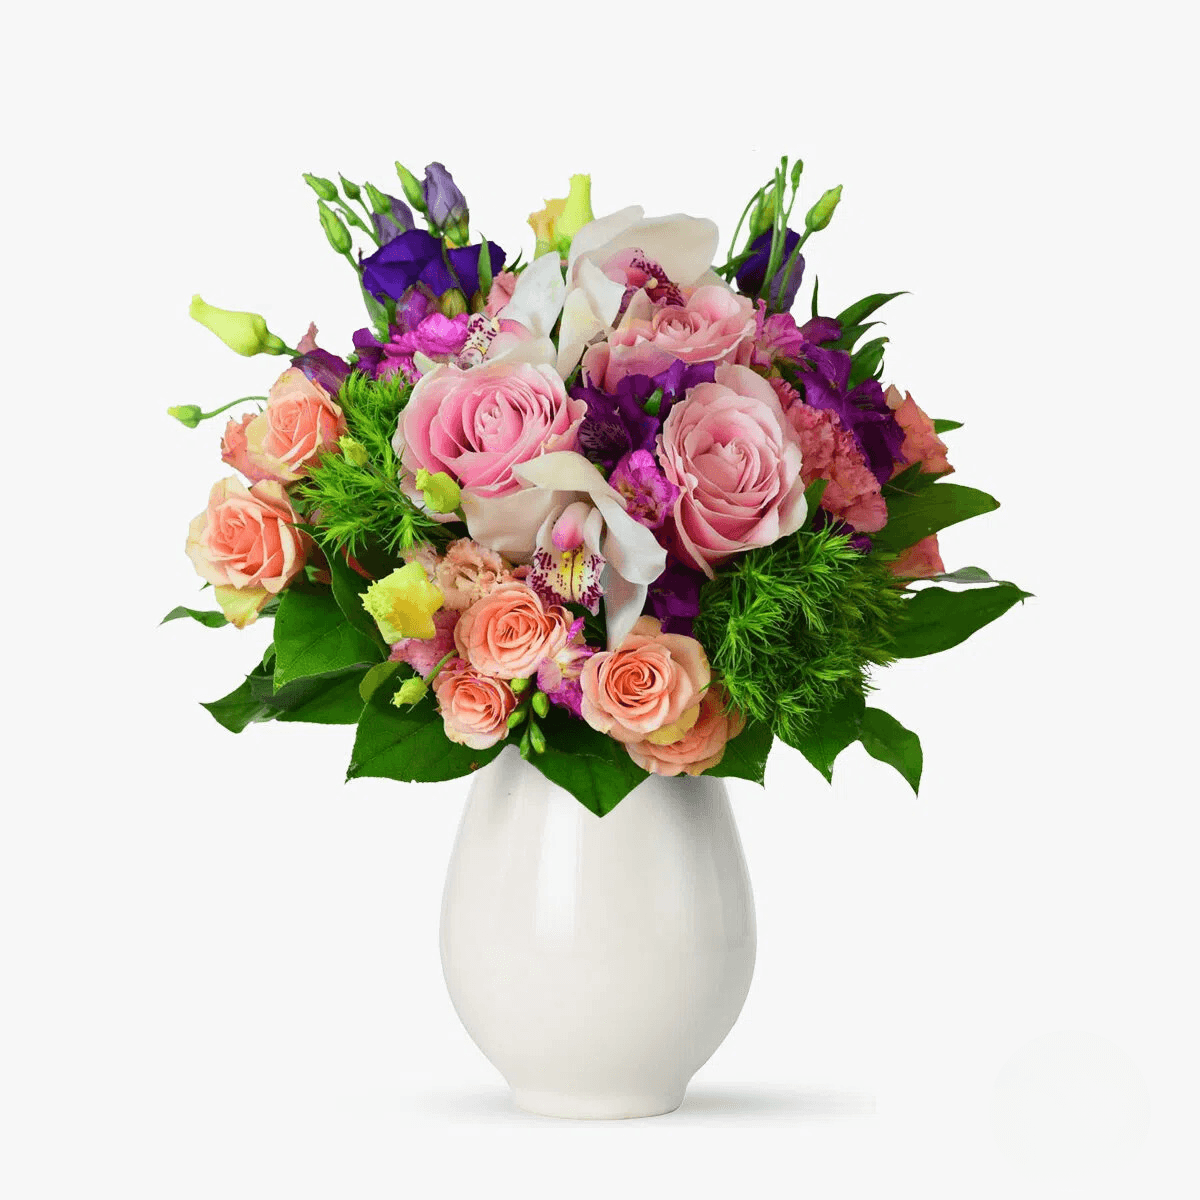 Buchet de flori – Violet Aniversar – Premium aniversar